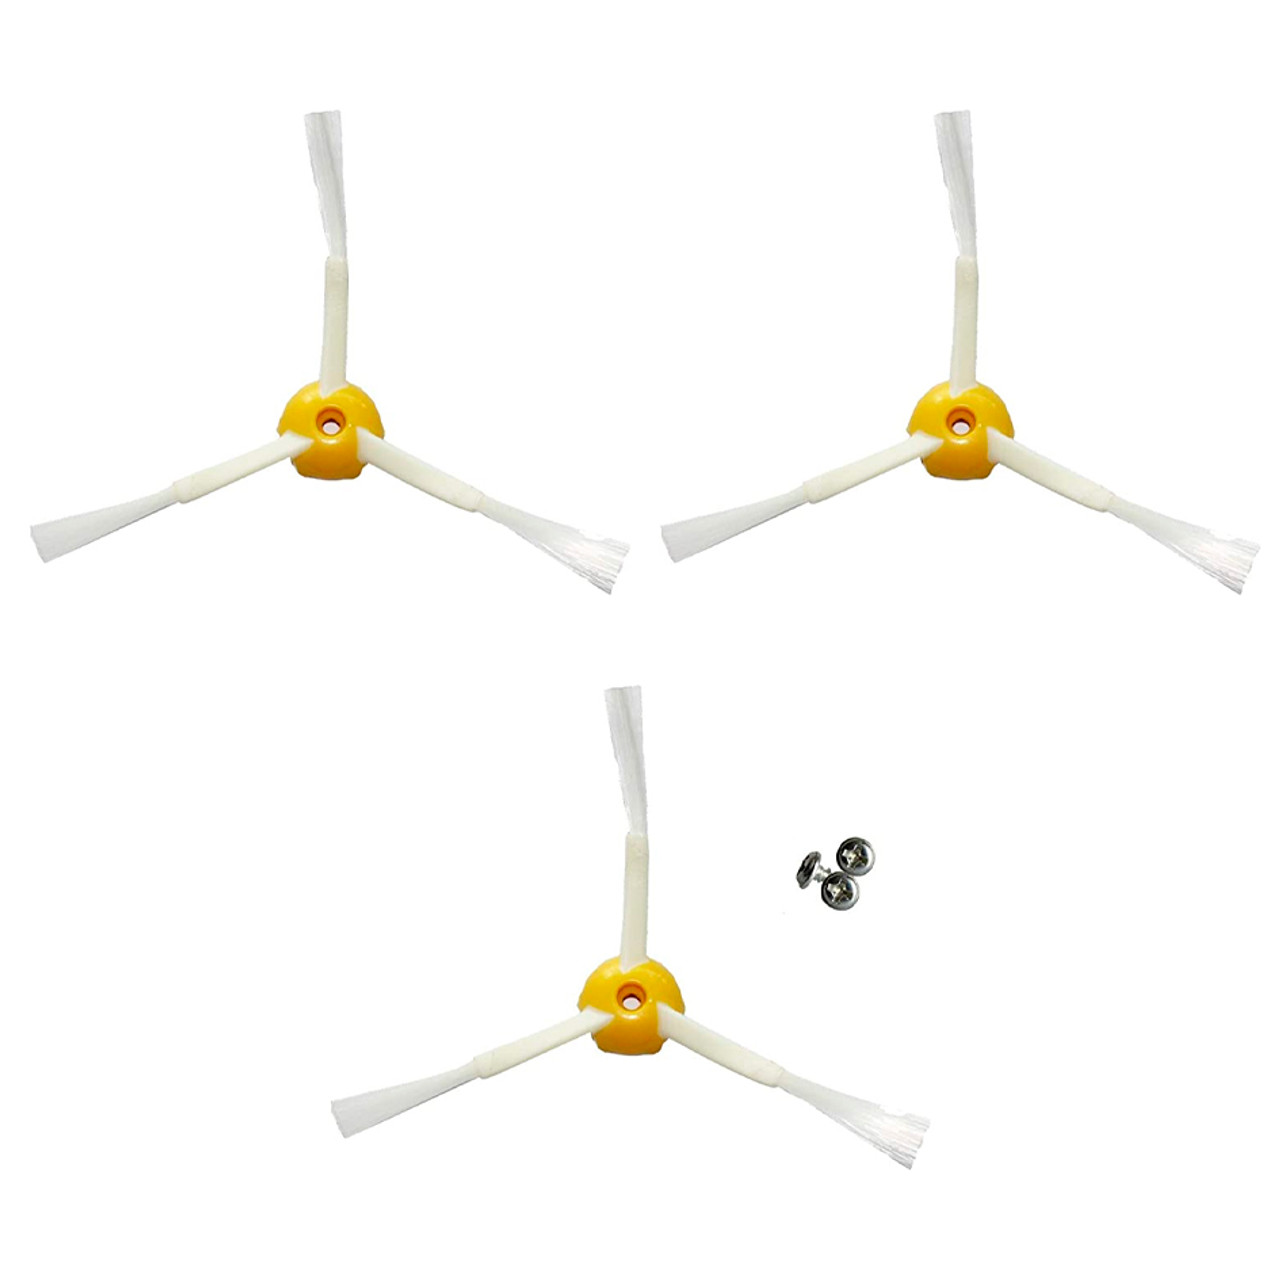 BAKUUM x2 Rodillos principales, cepillo central para iRobot Roomba Serie  600 y 700. Cepillo para iRobot Roomba multifuncion de cerdas y silicona